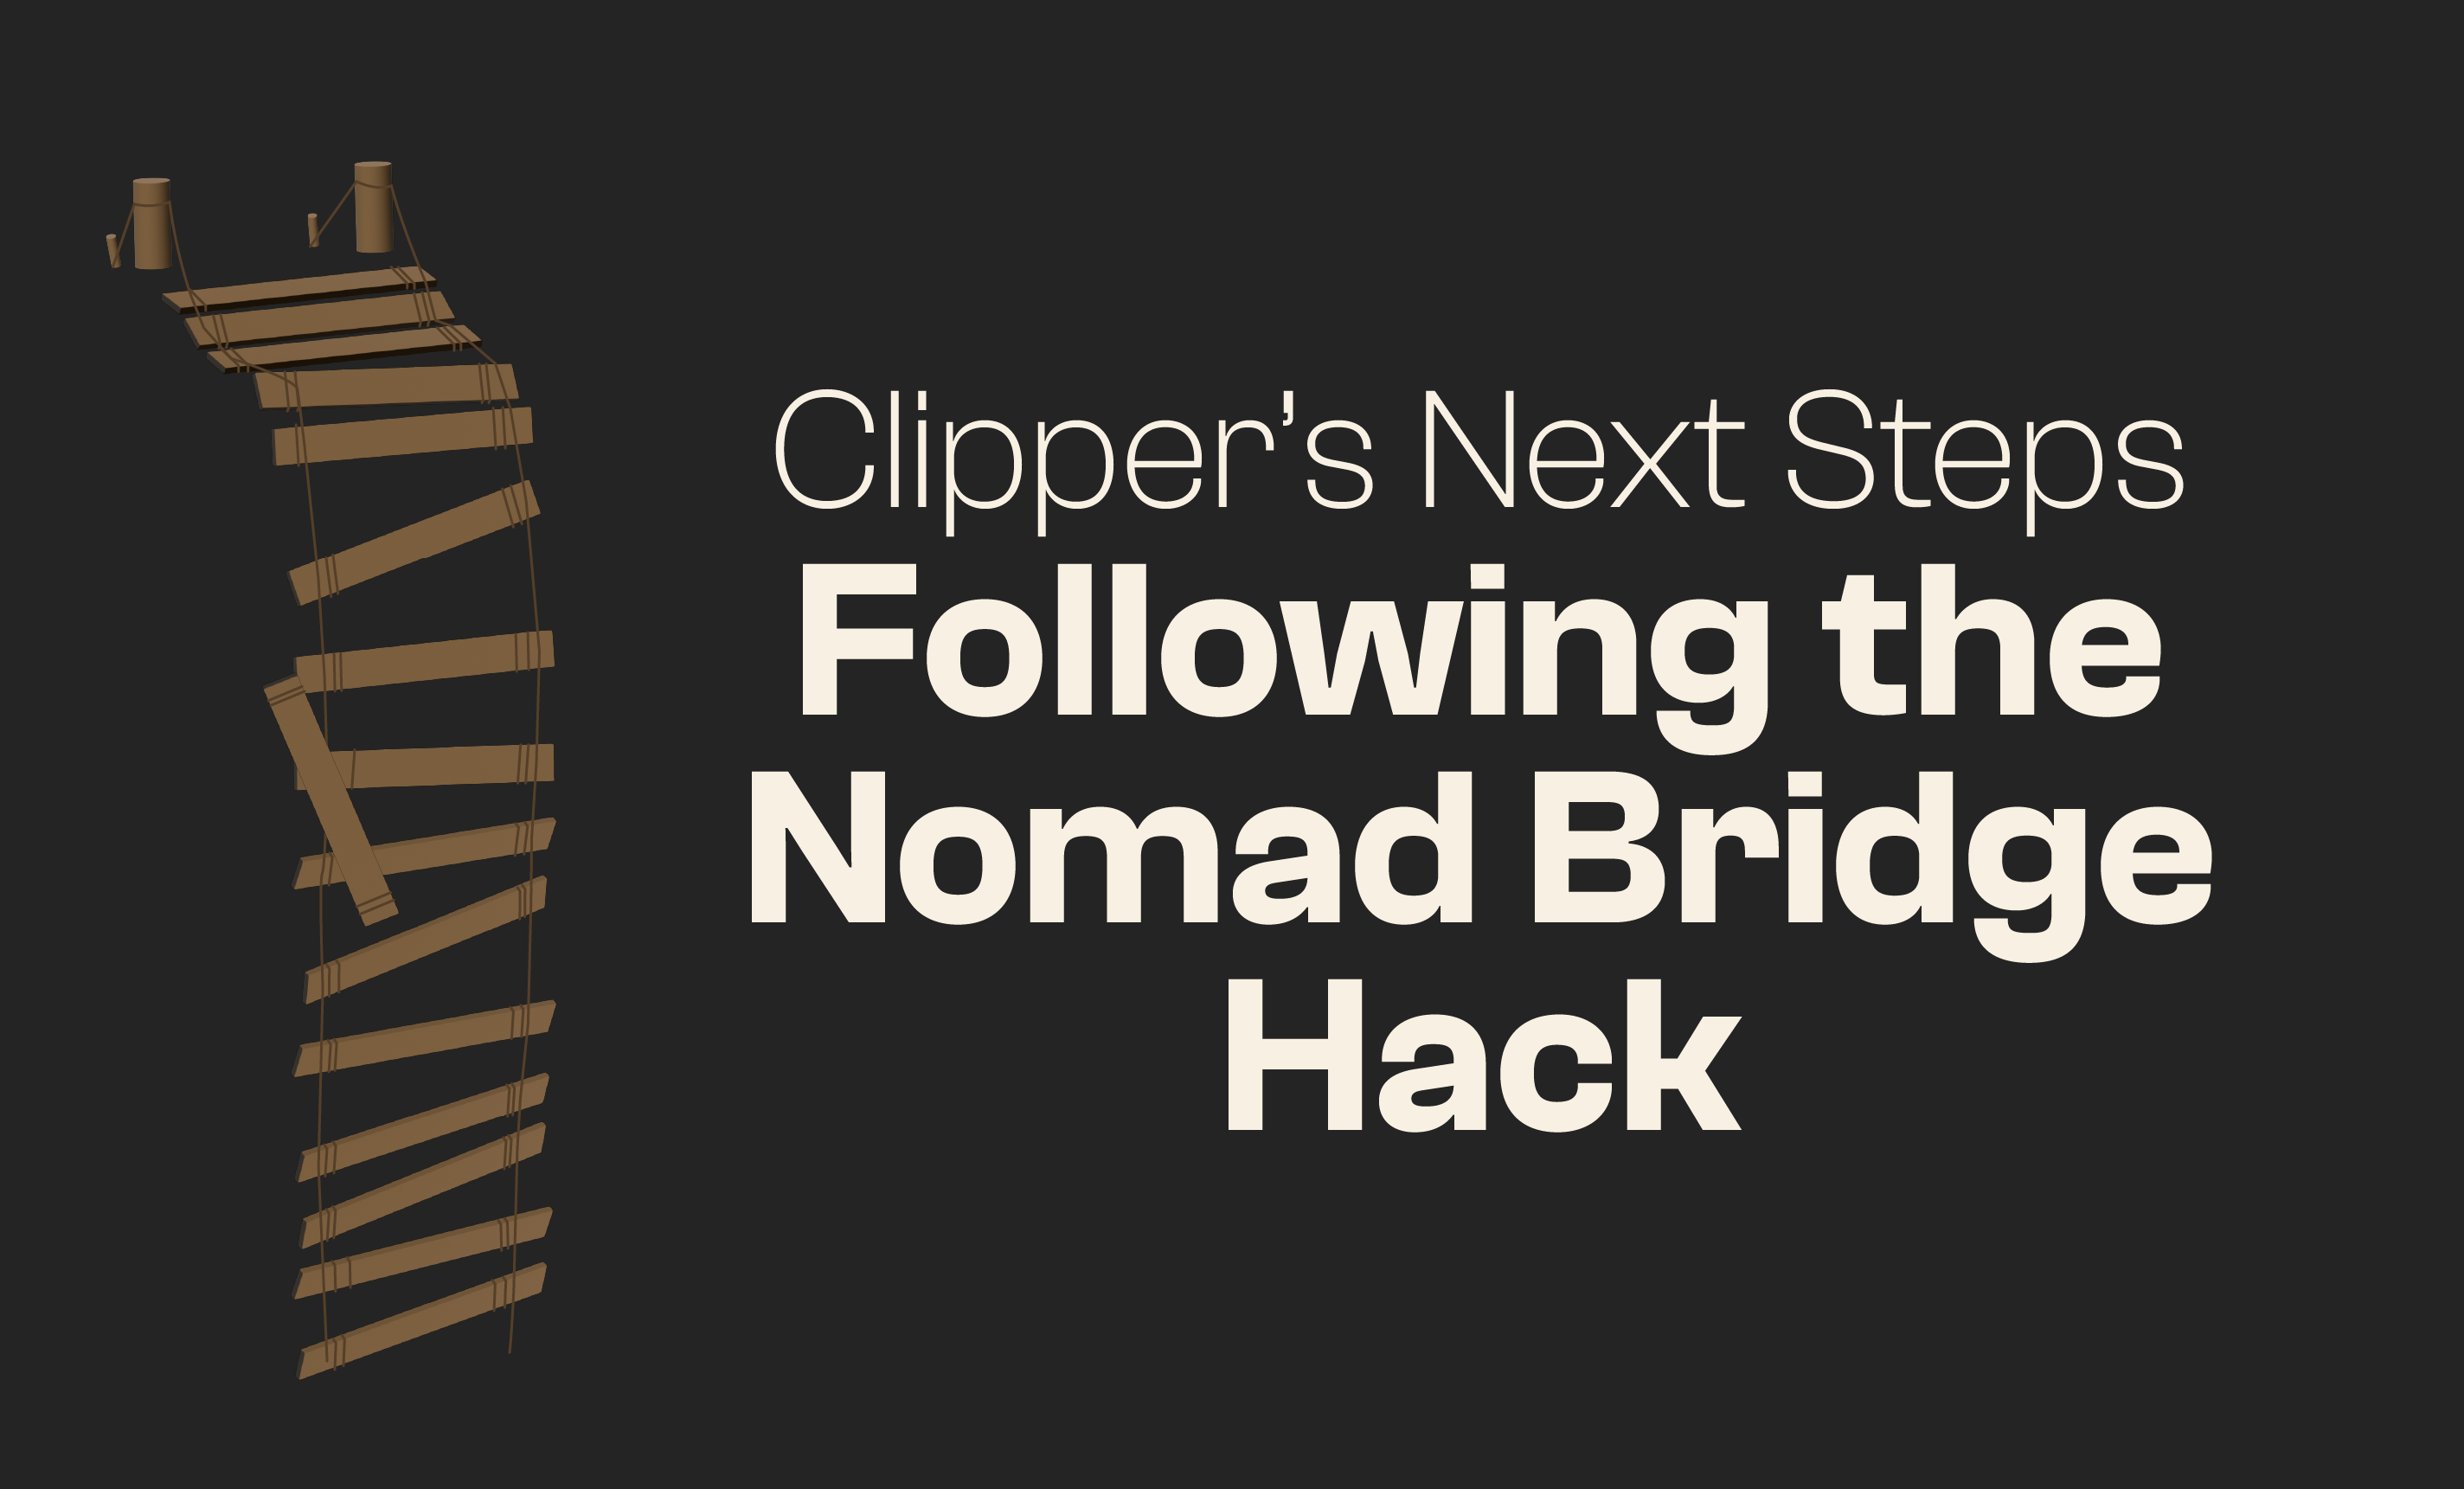 Clipper’s Next Steps, Following the Nomad Bridge Hack